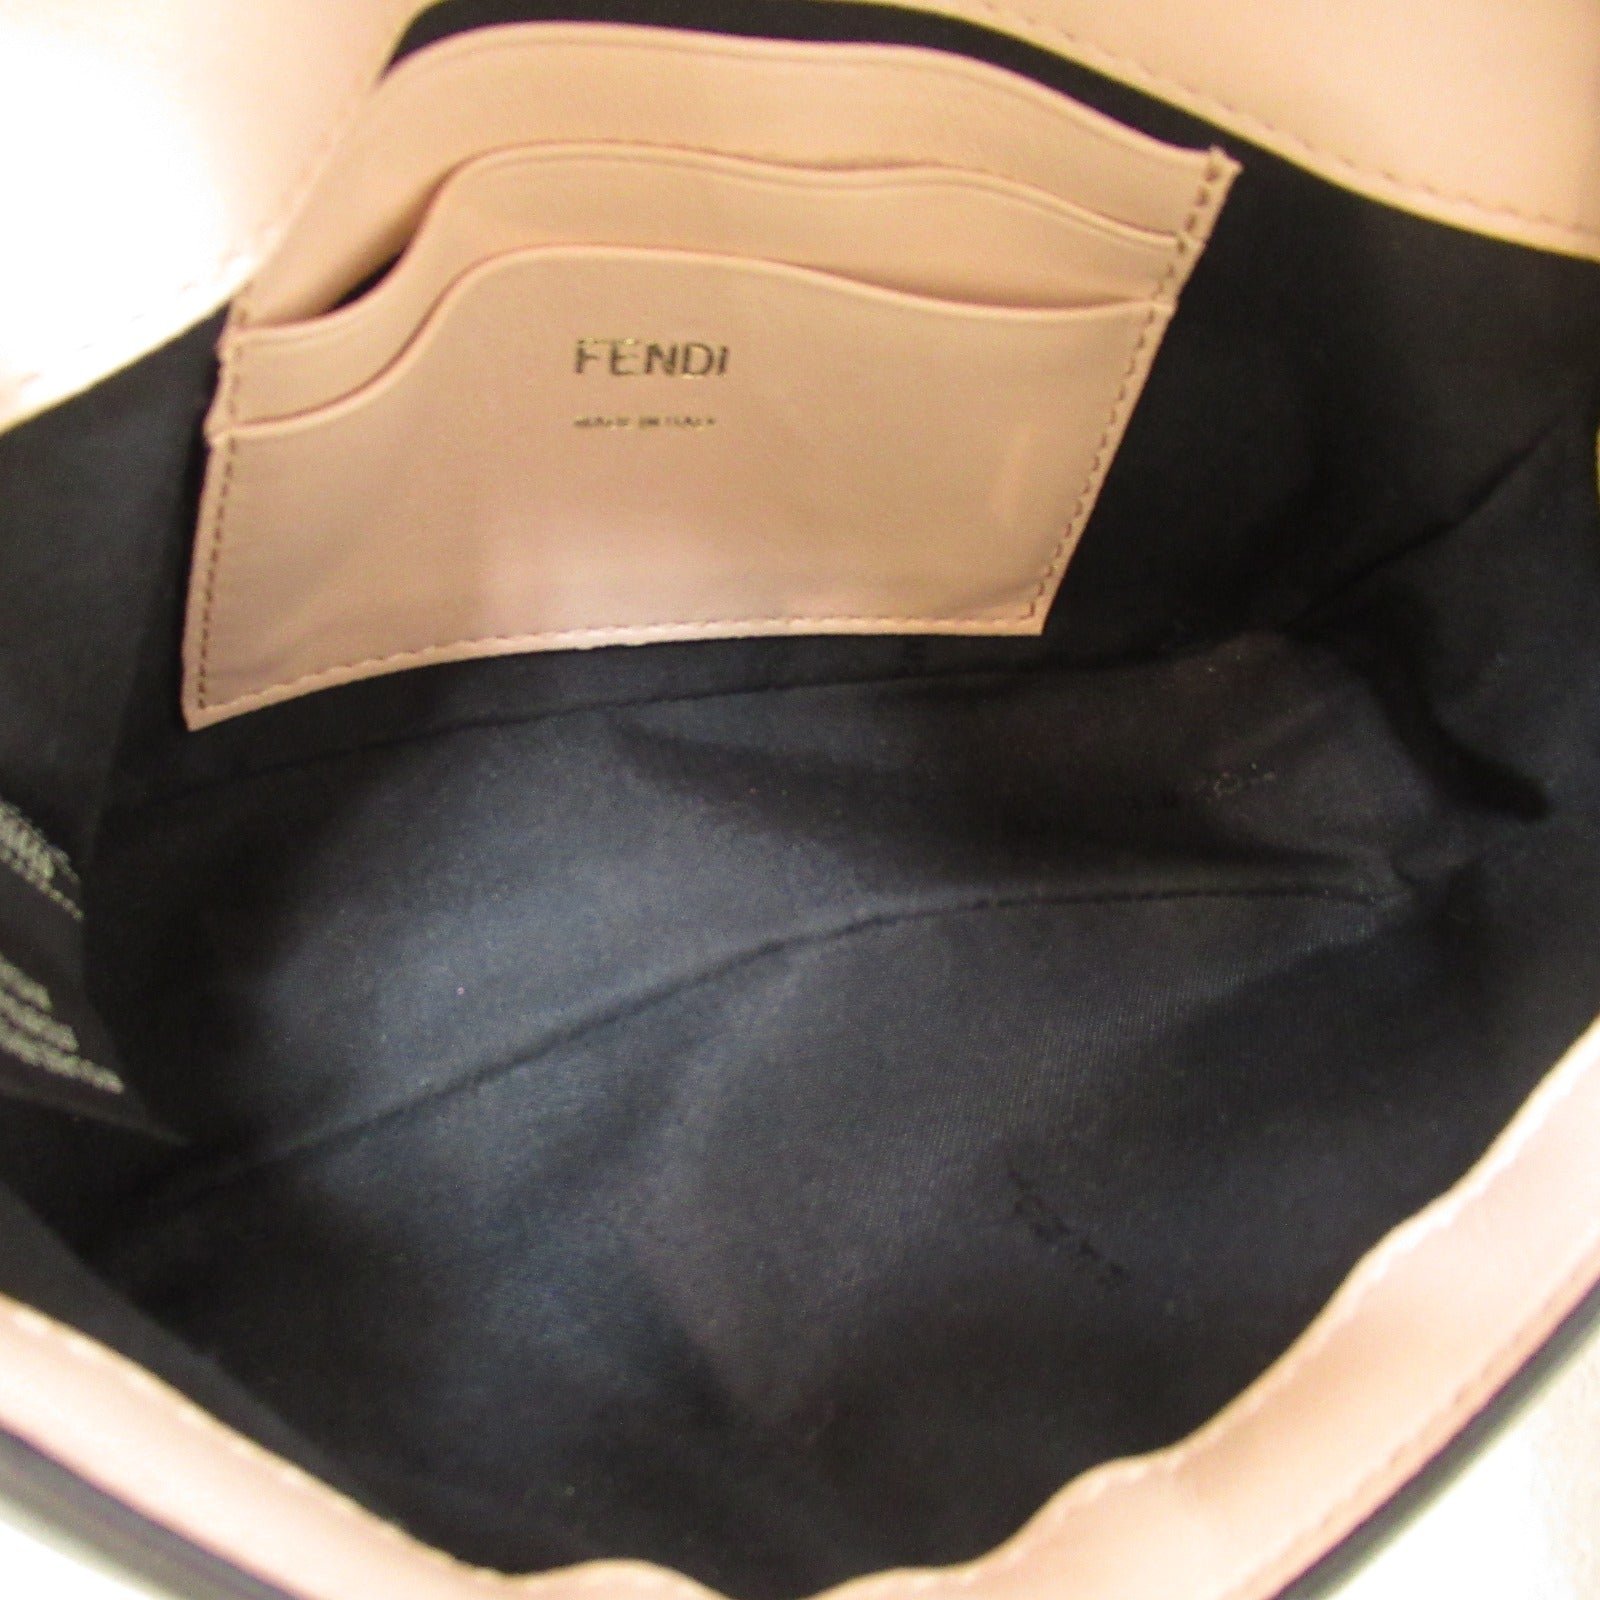 Fendi Chain Shoulder Bag Fendi Chain Shoulder Bag Fendi Chain Shoulder Bag Fendi Chain Shoulder Bag